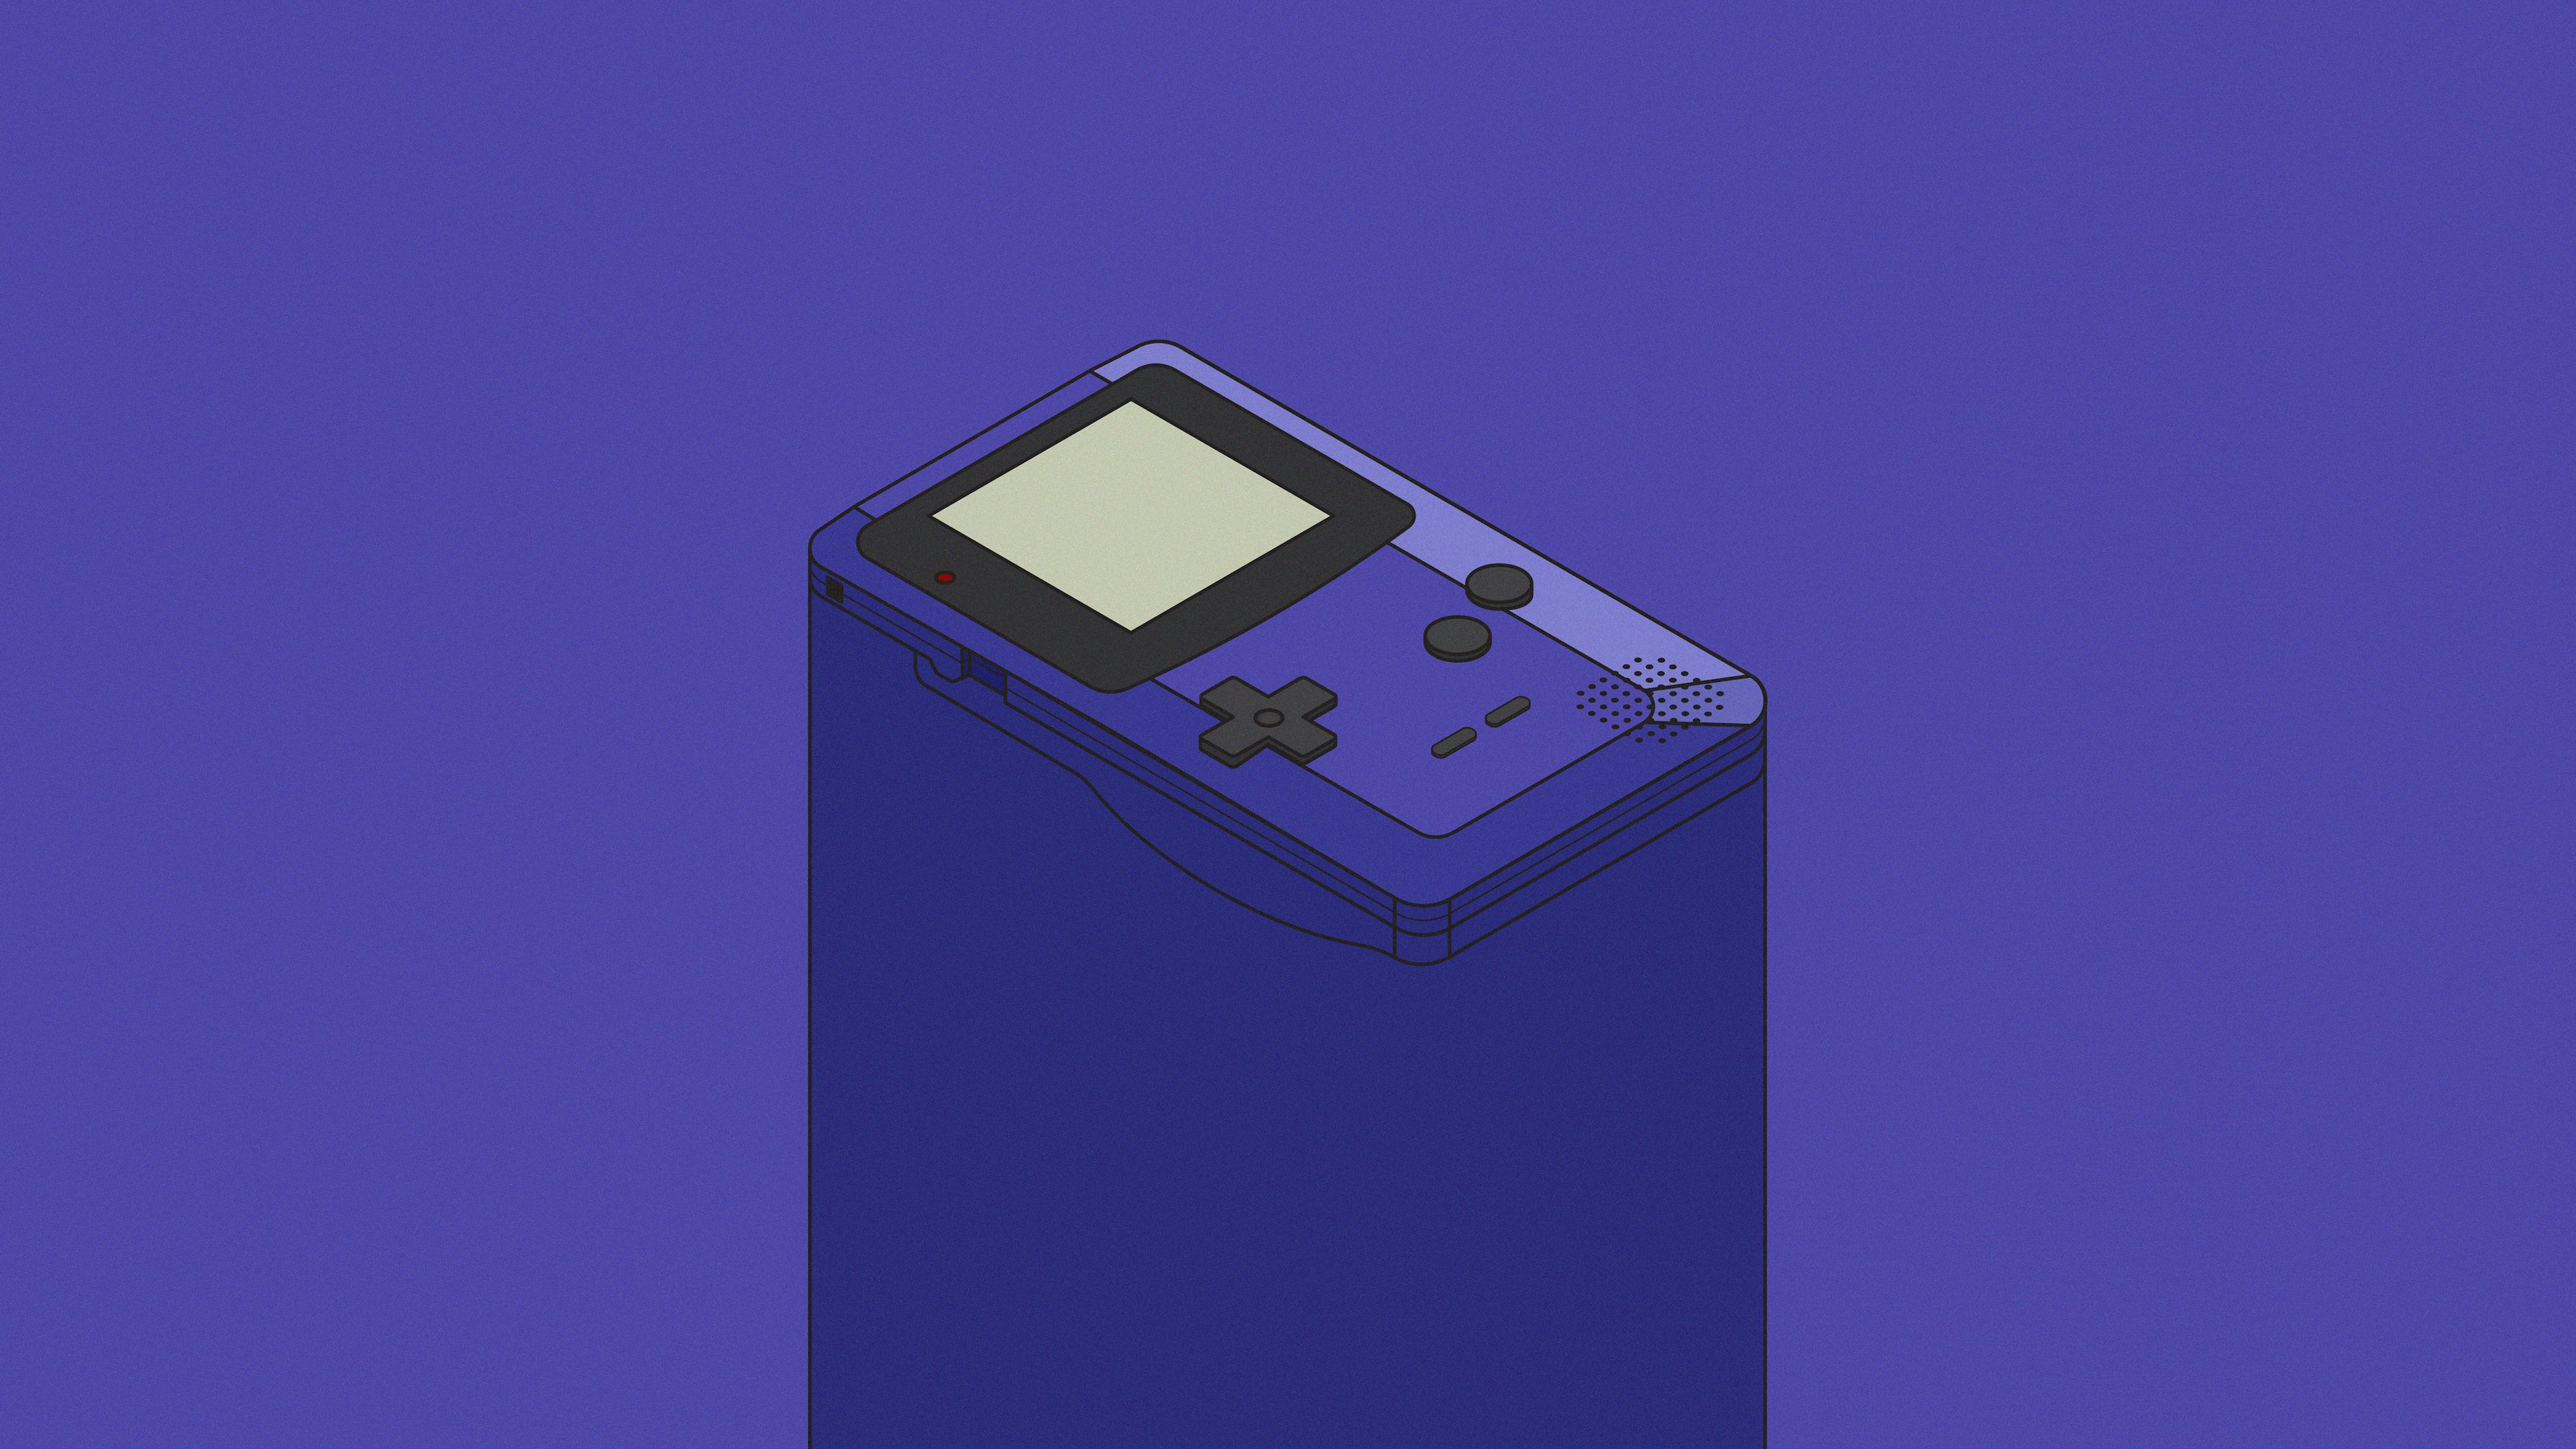 General 3840x2160 digital art artwork illustration minimalism Nintendo GameBoy Color consoles shadow 4K simple background blue blue background